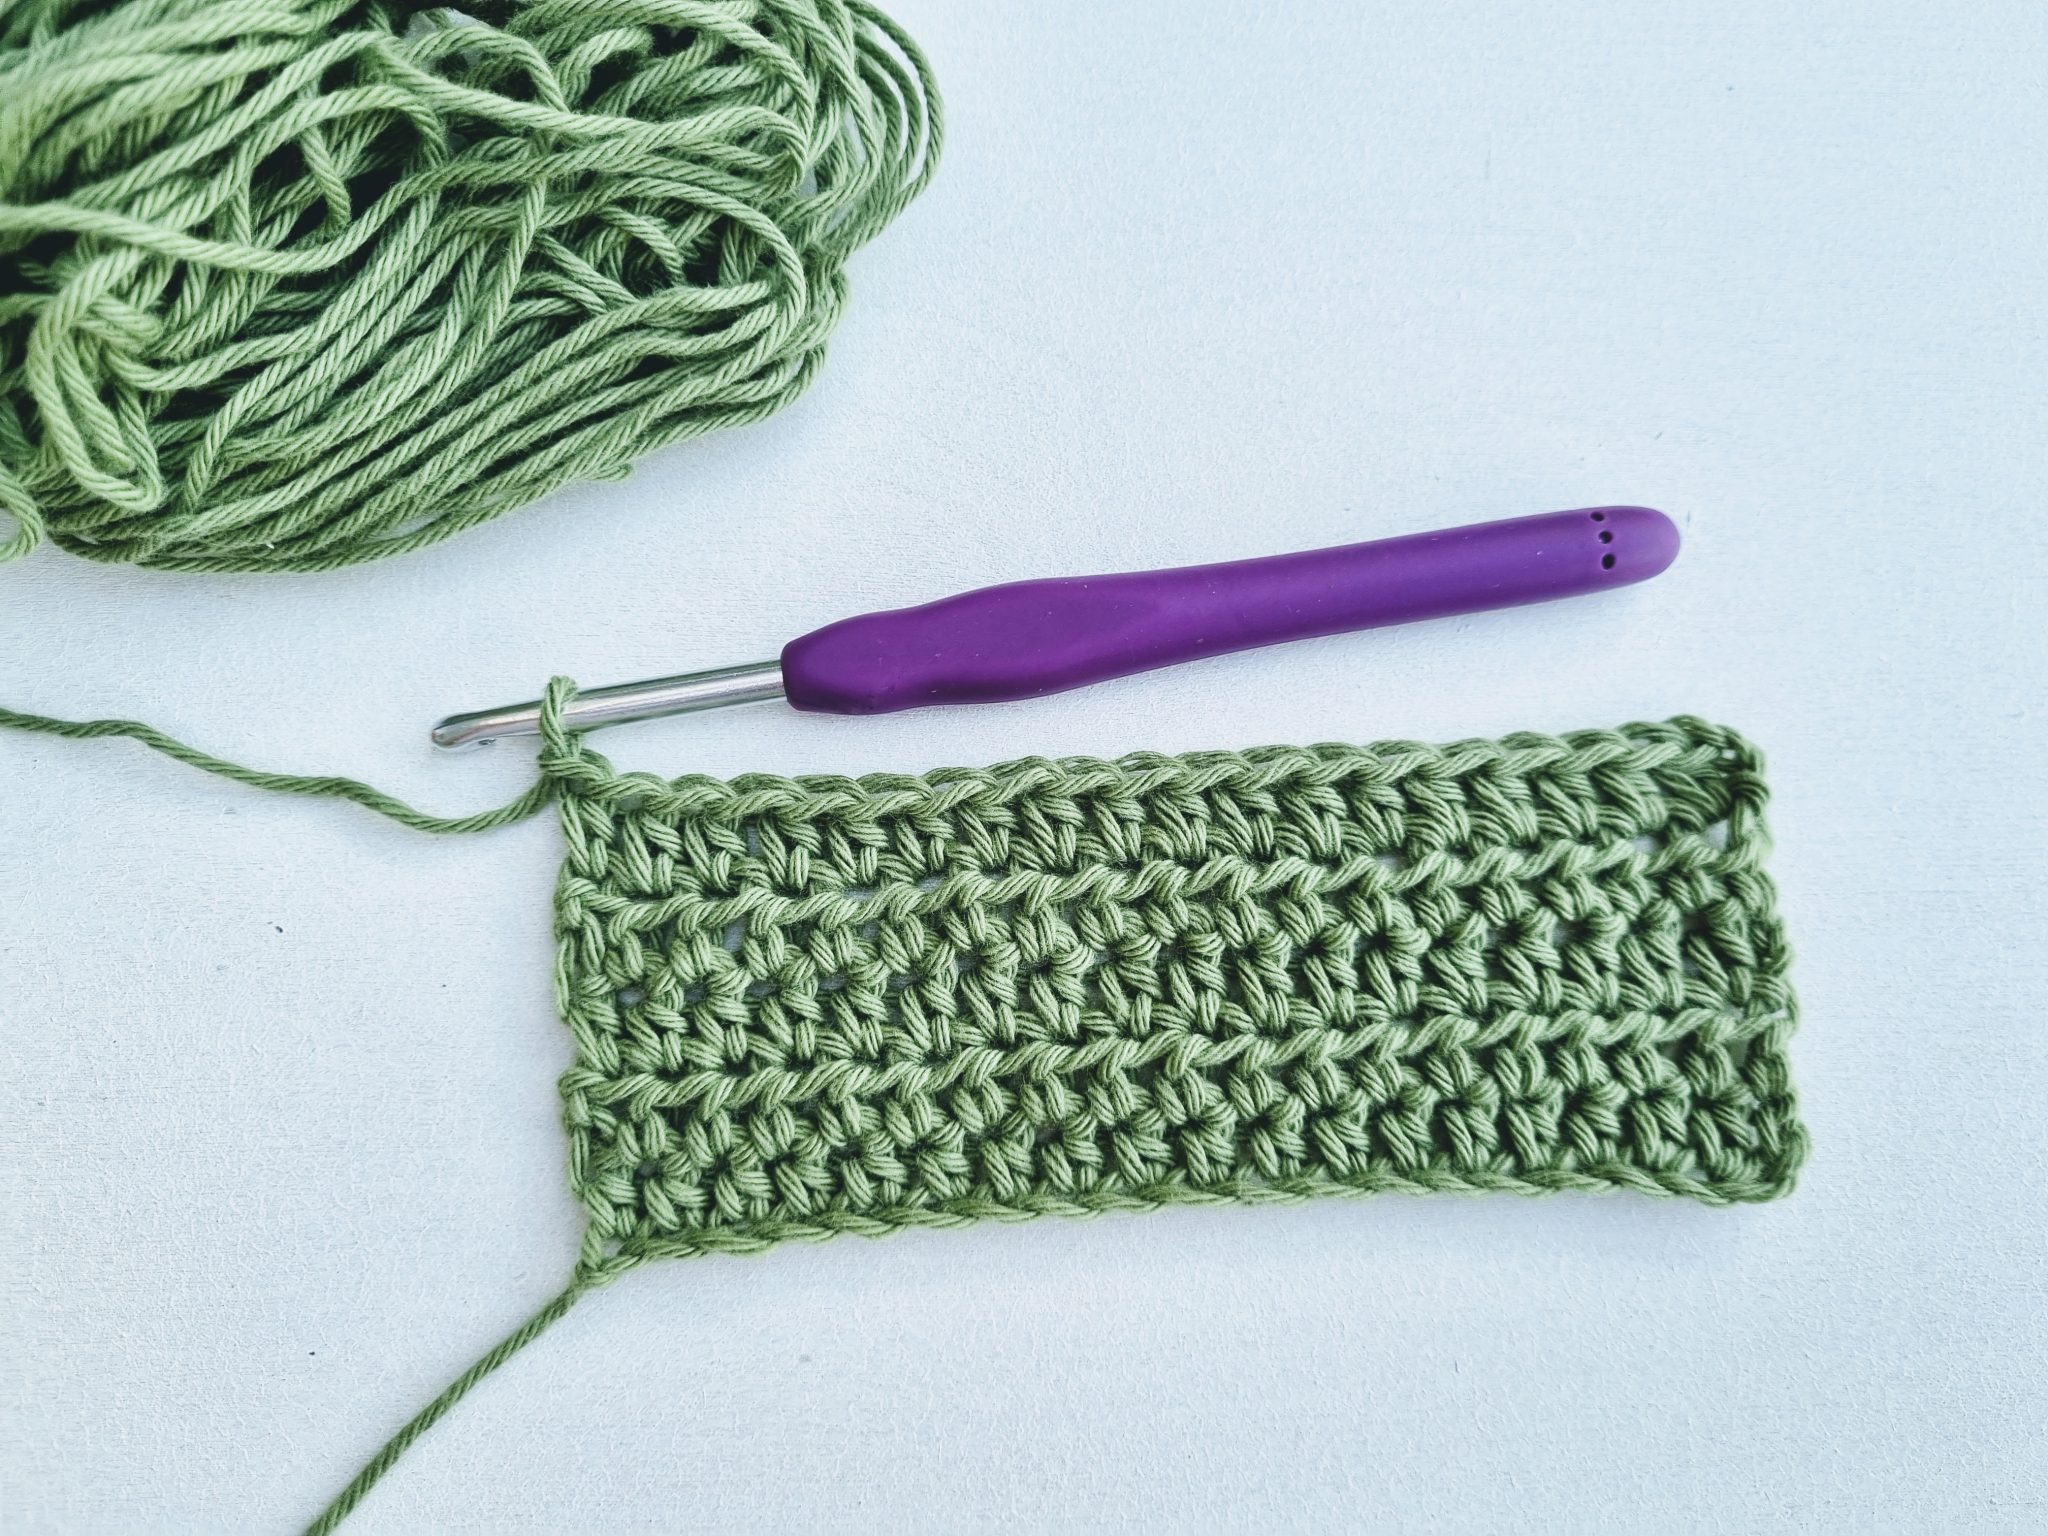 How to Half Double Crochet (HDC) - Instructions - My Crochet Space